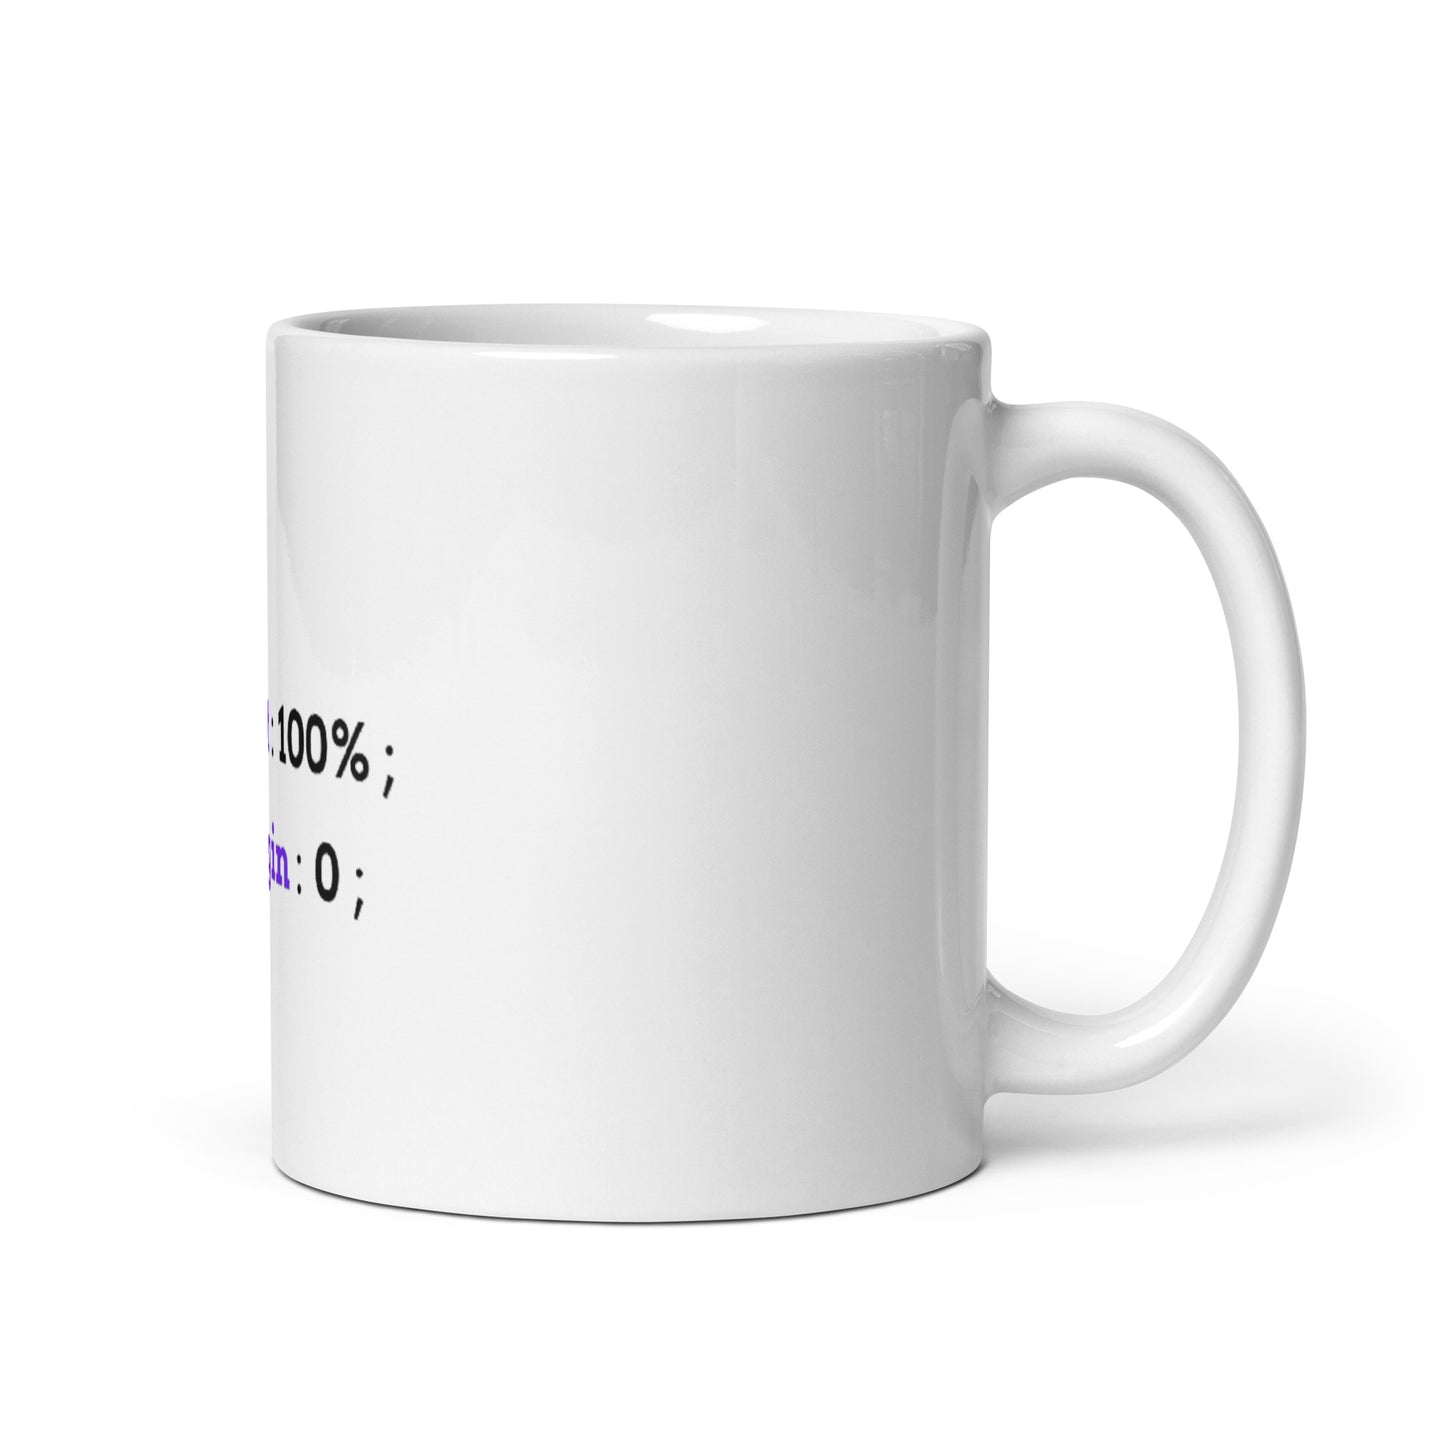 Wife glossy mug